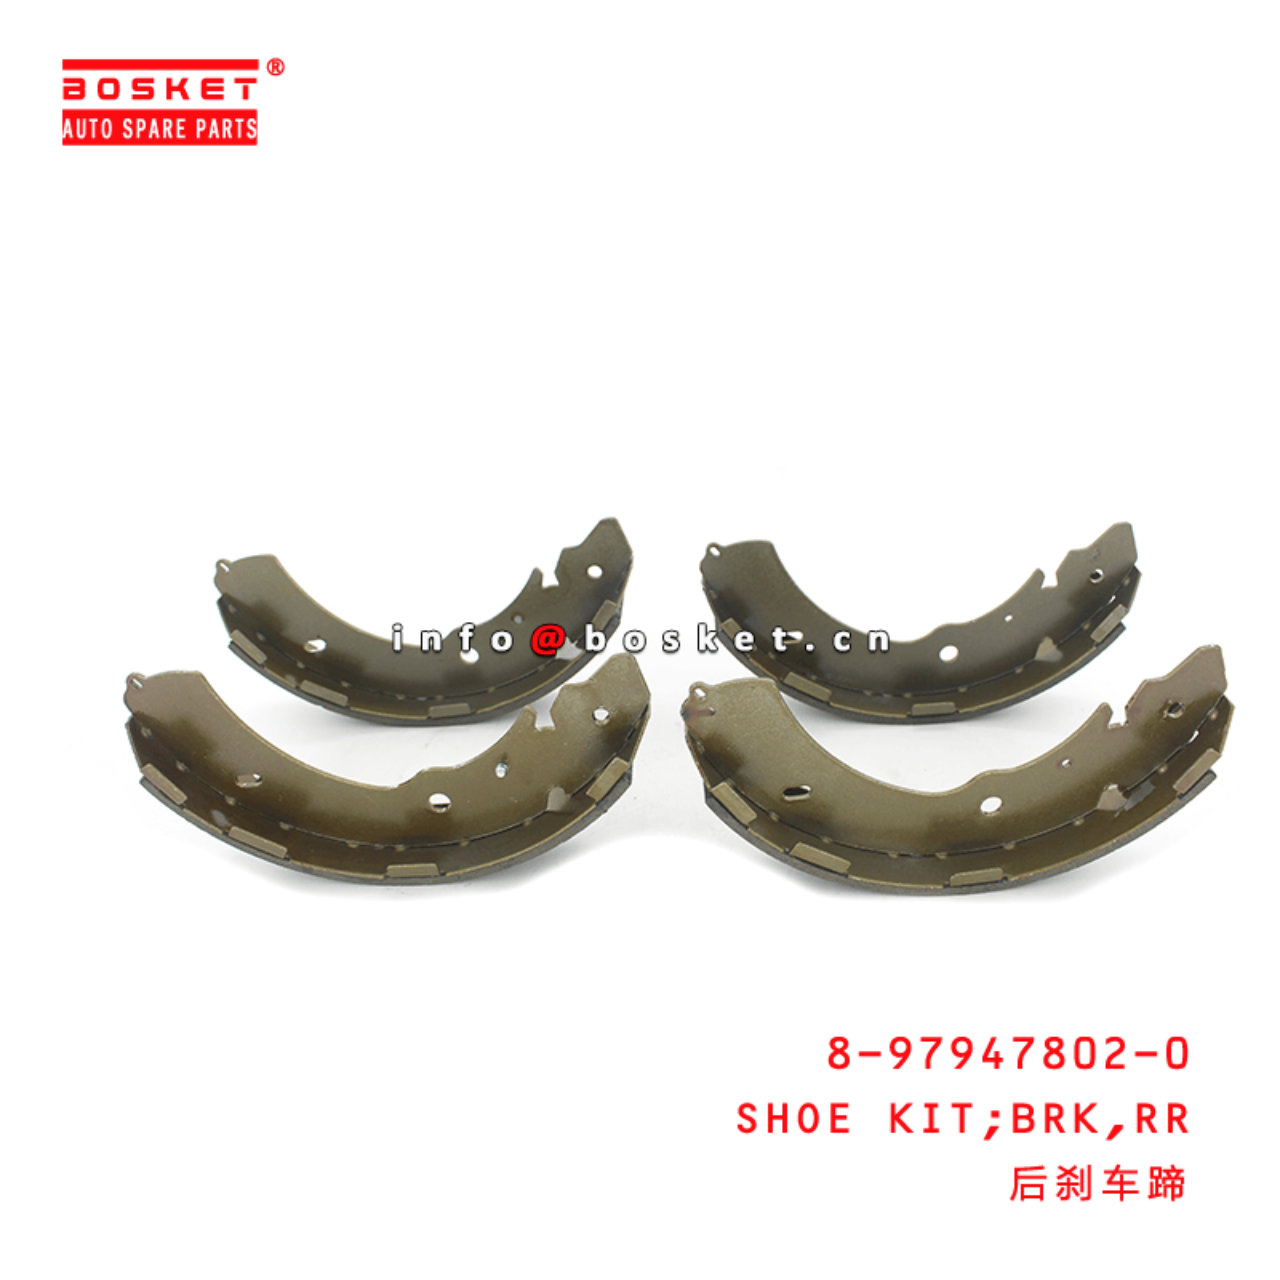 8-97947802-0 Rear Brake Shoe Kit 8979478020 Suitable for ISUZU DMAX 4X4 2003-2012